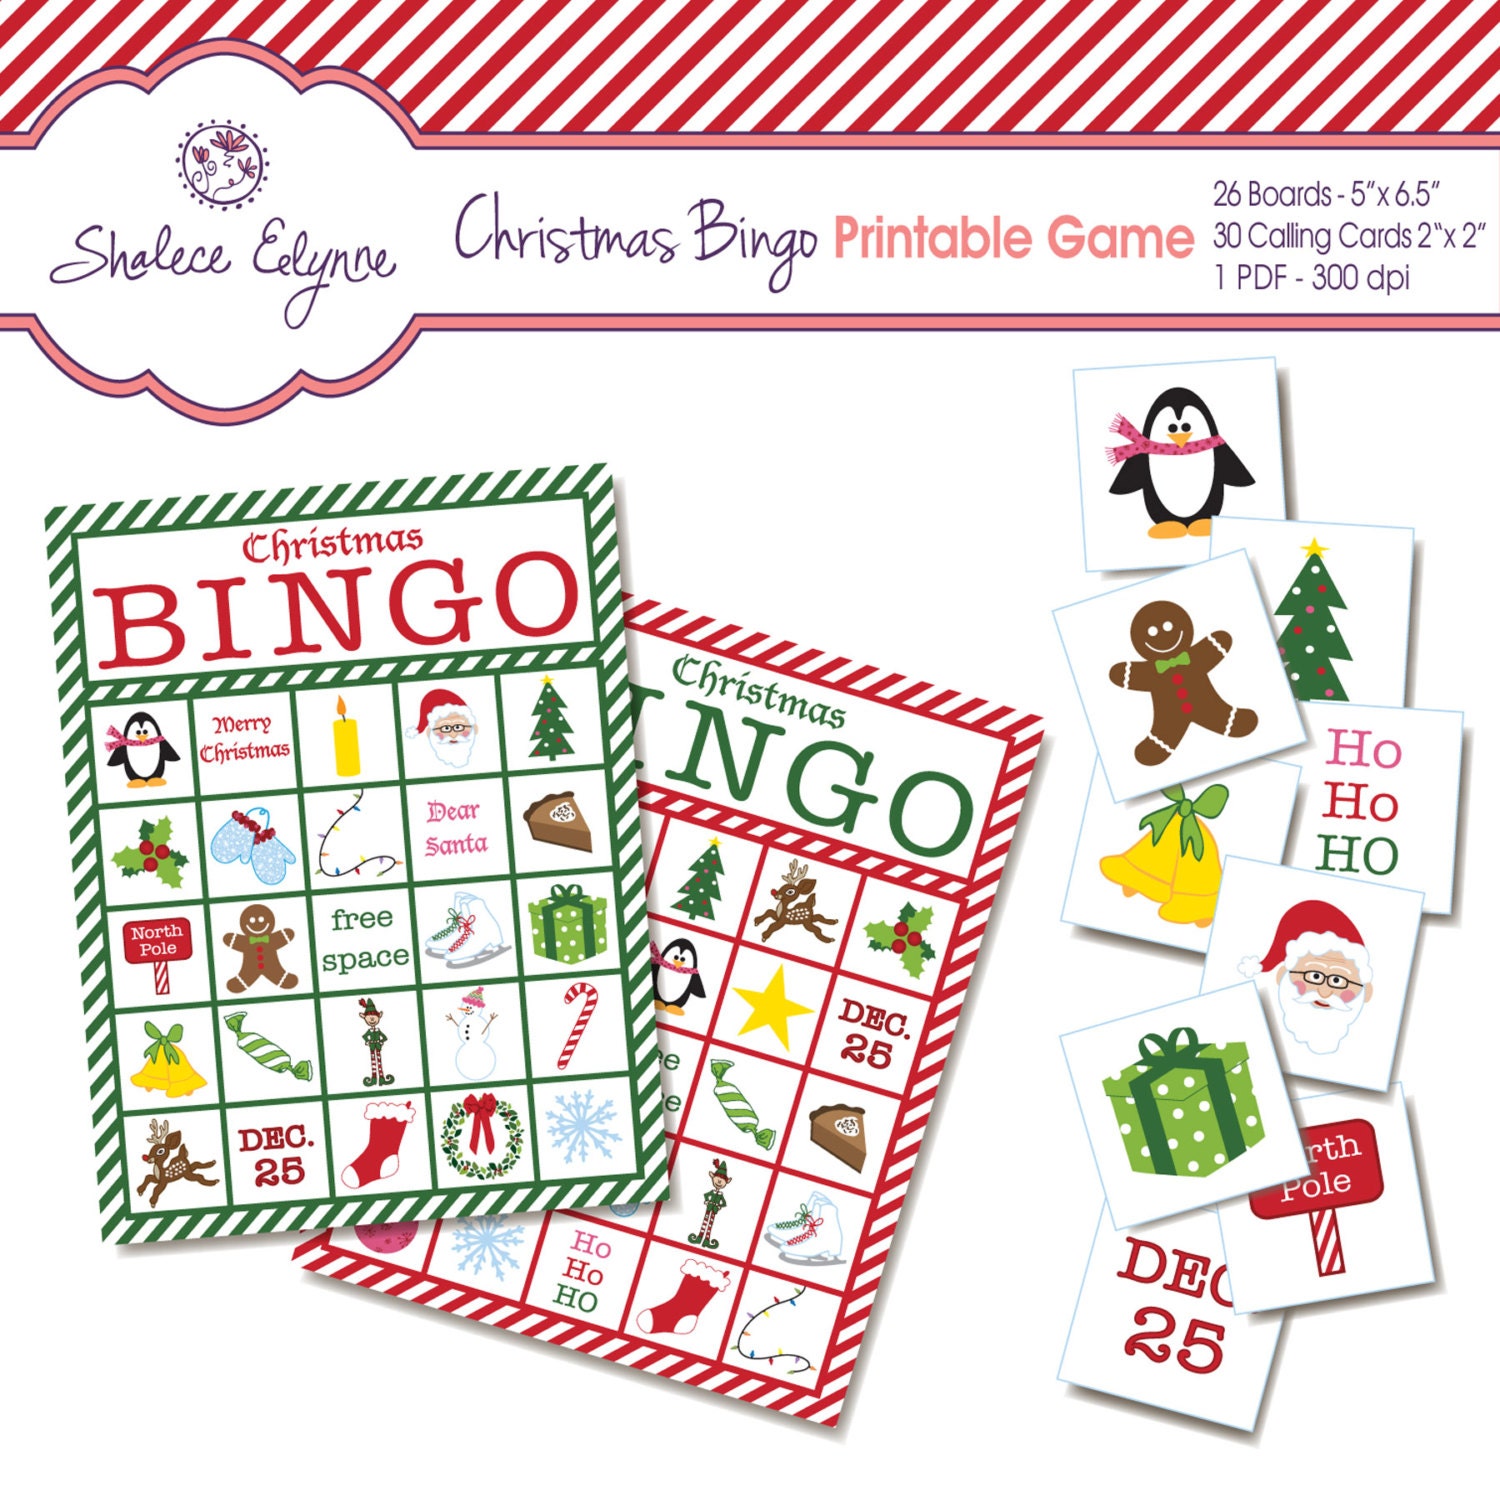 Christmas bingo game to buy